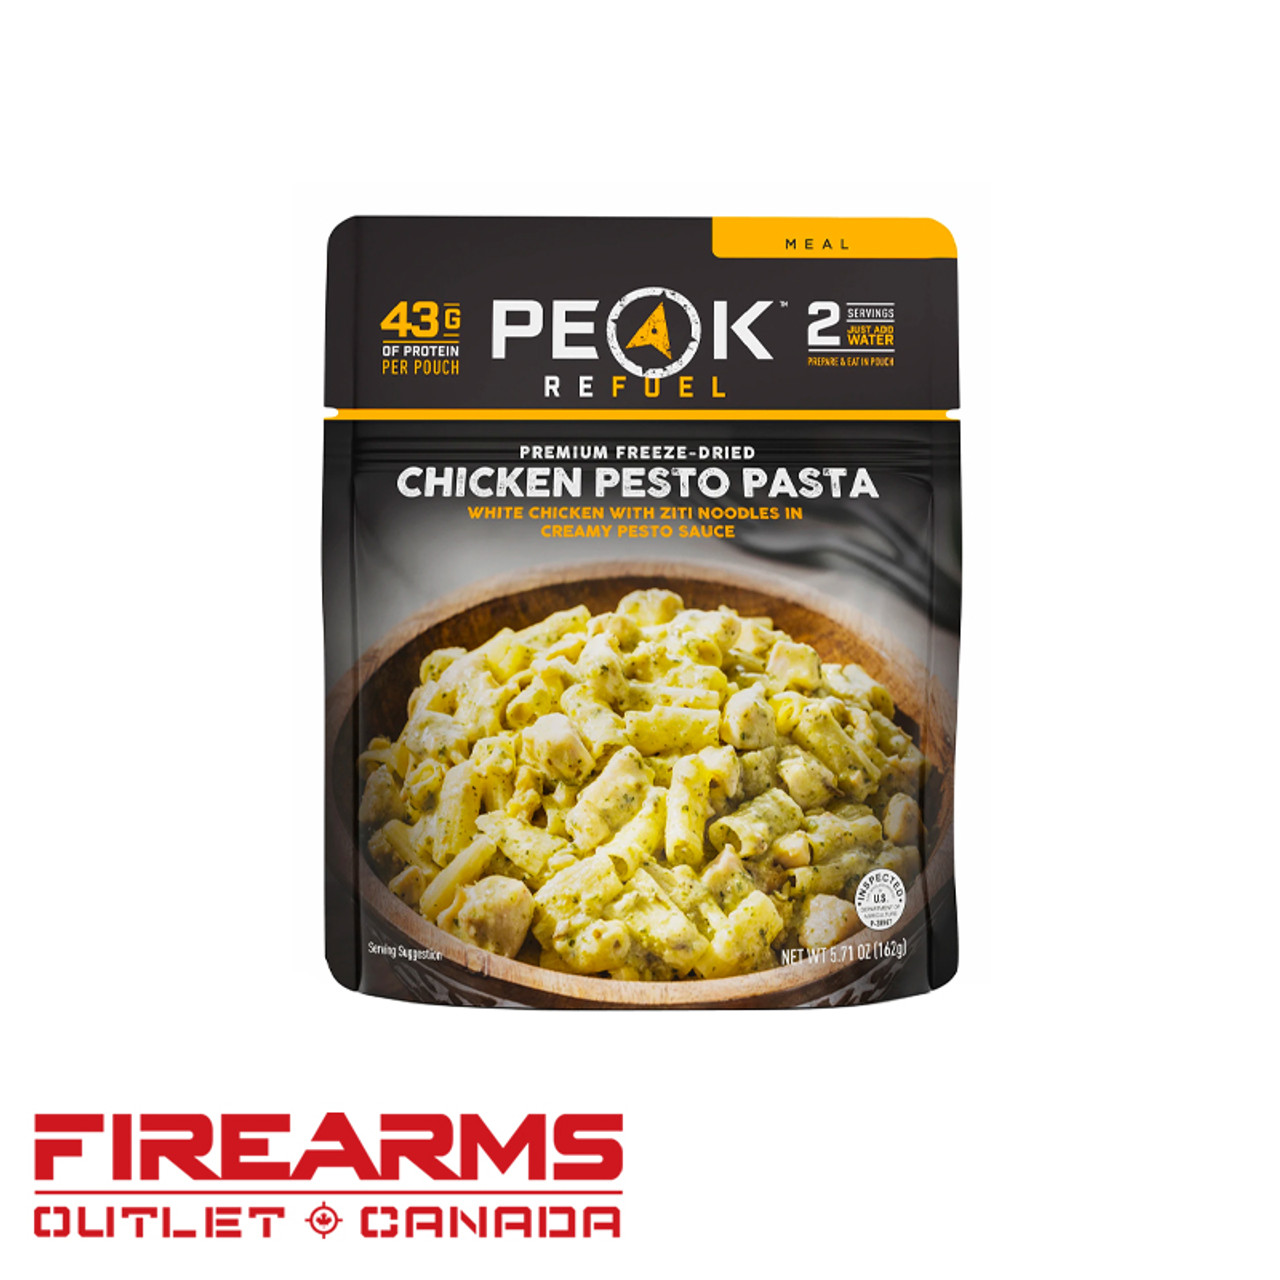 Peak Refuel - Chicken Pesto Pasta [57778]